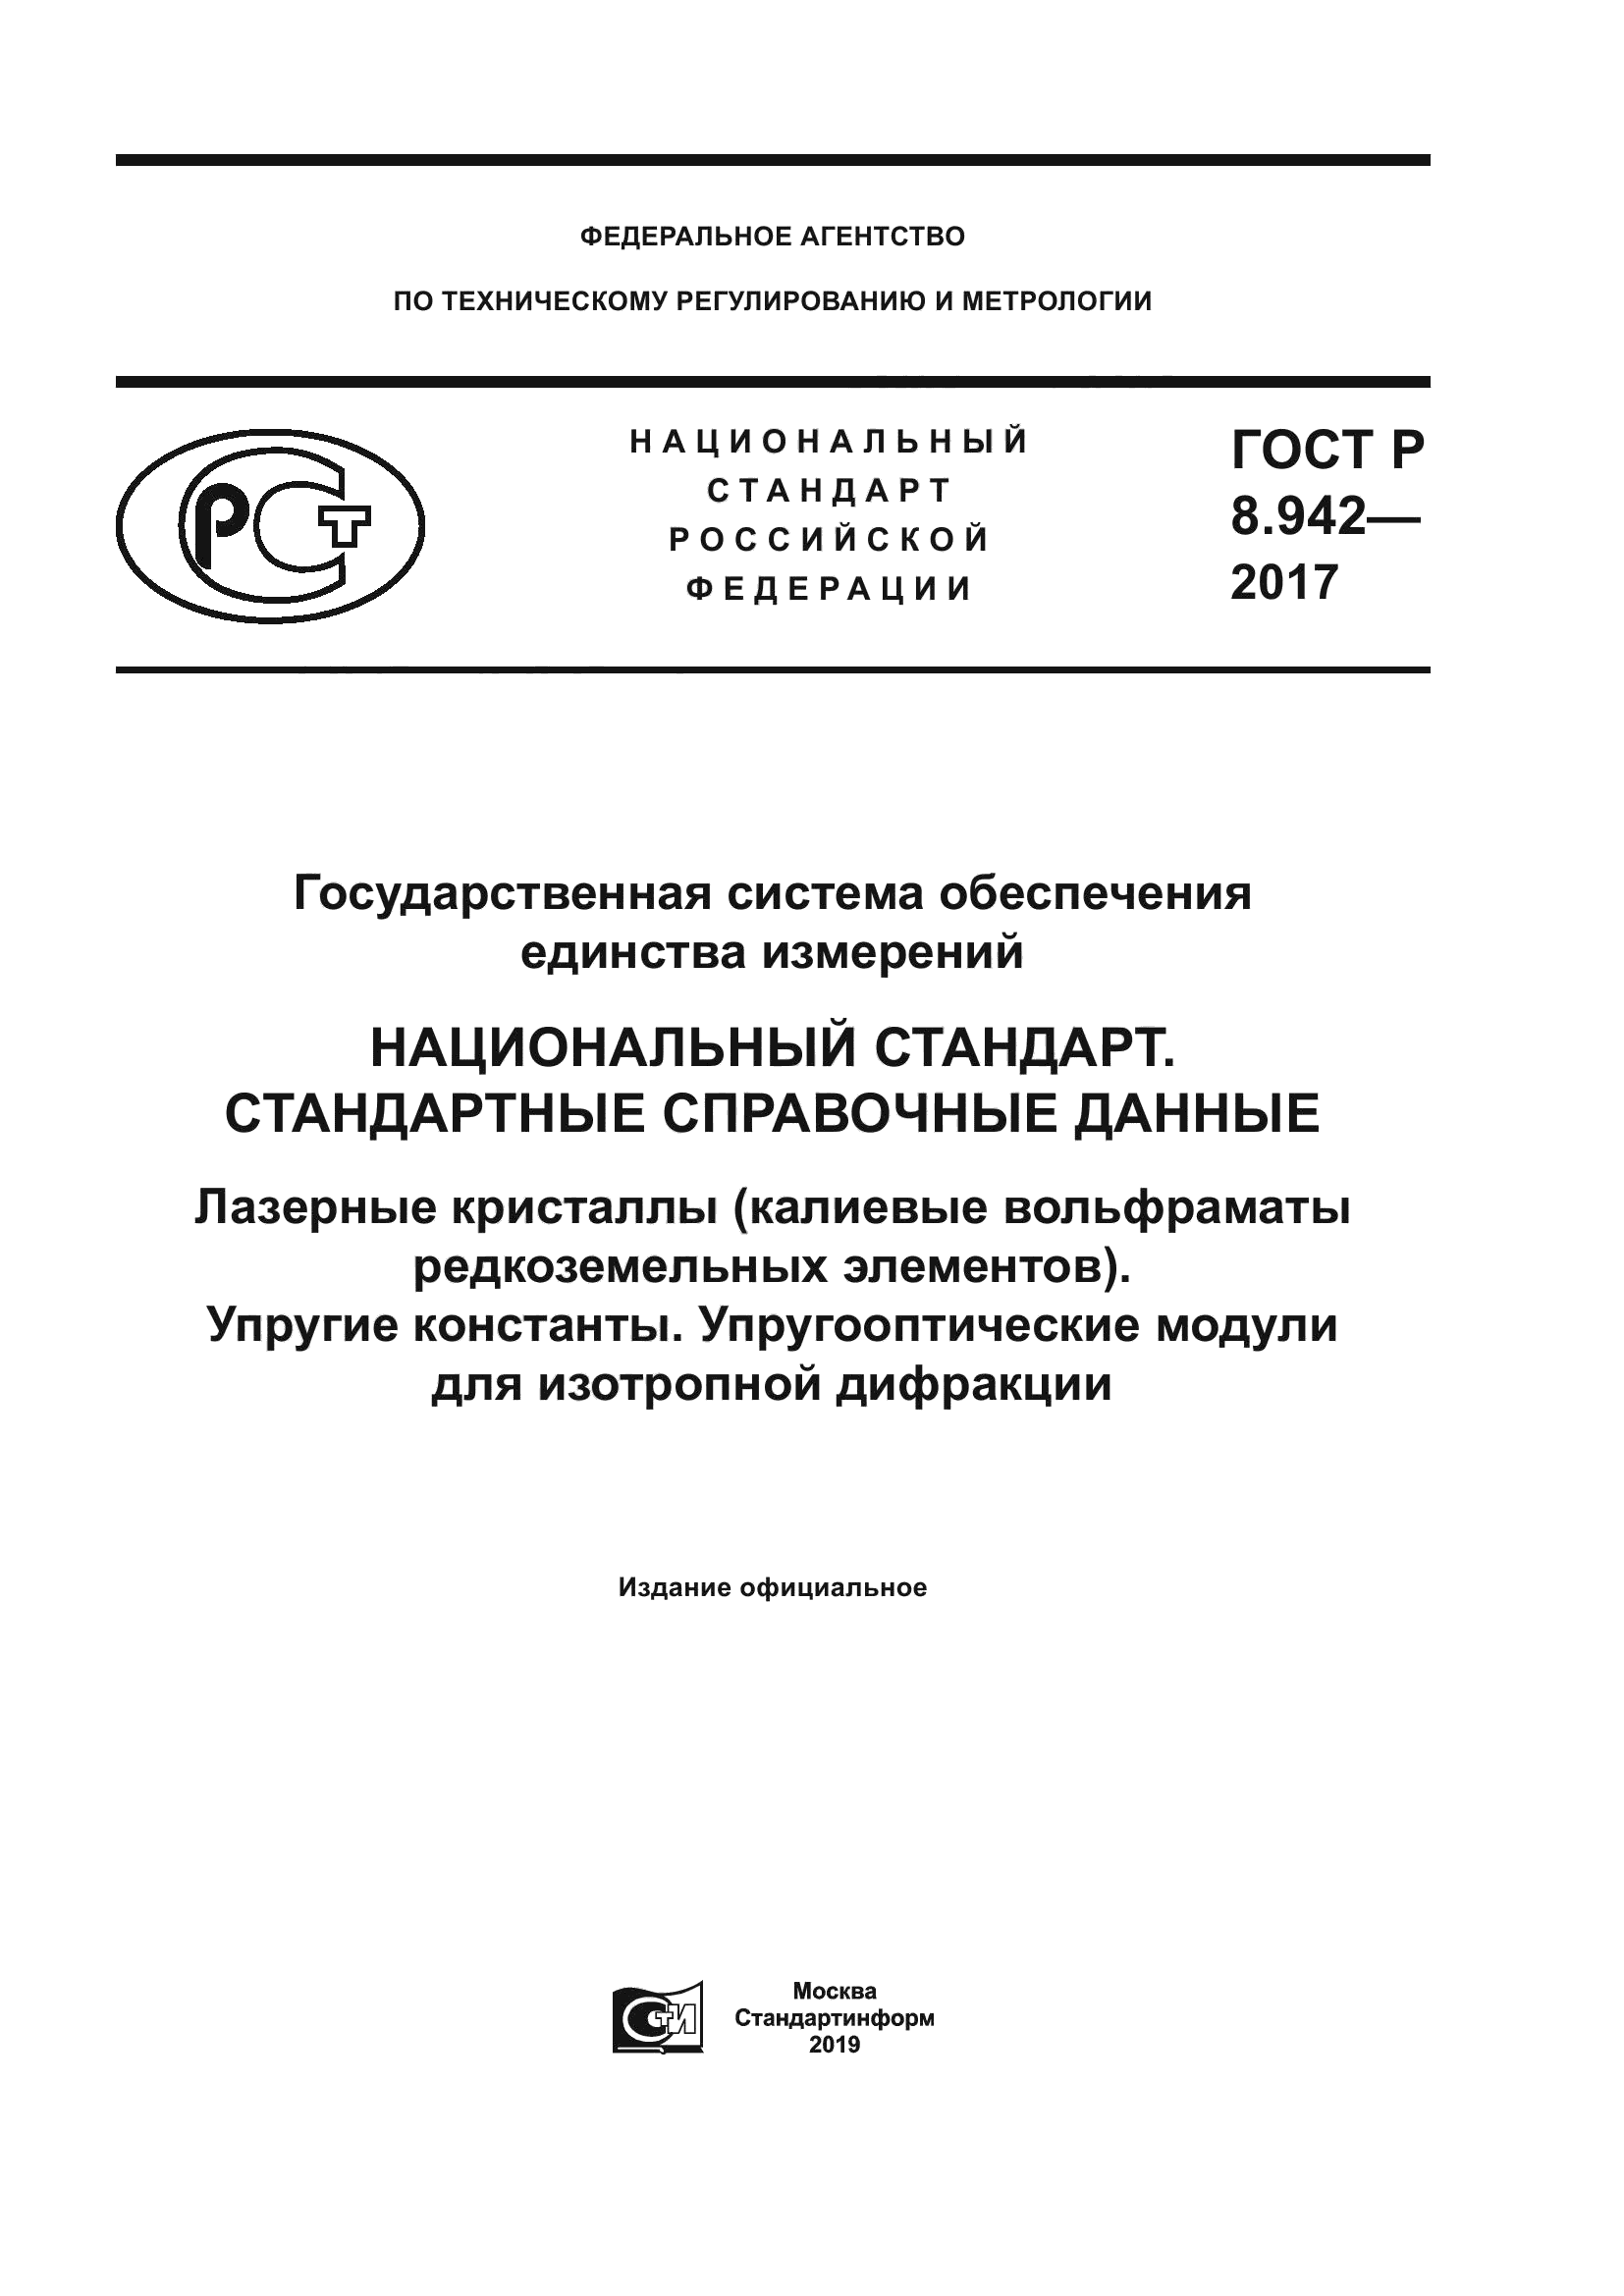 ГОСТ Р 8.942-2017